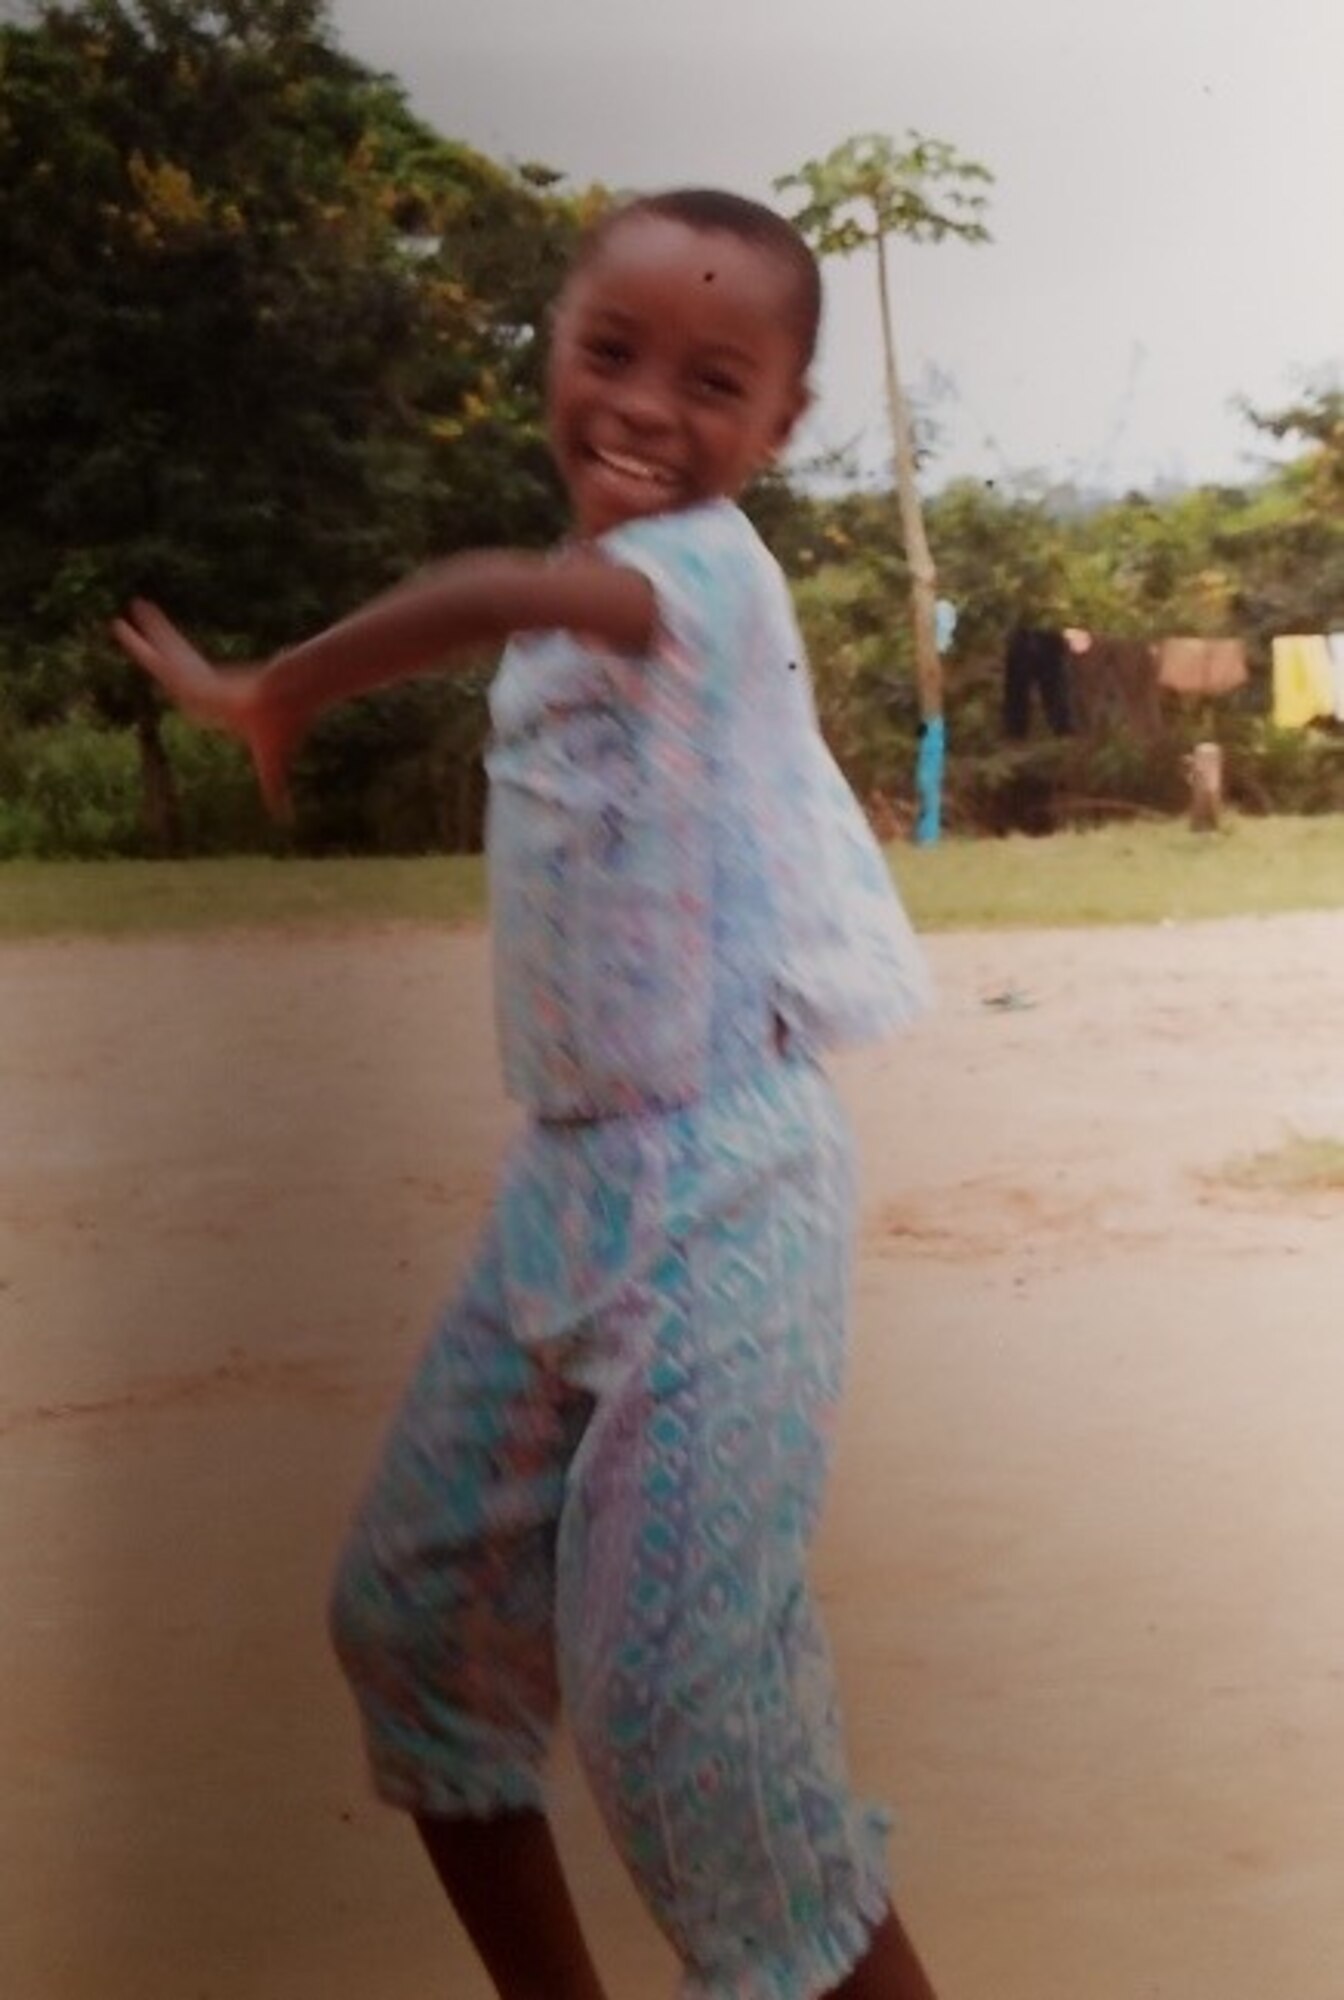 A Ghanaian orphan girl twirling at the orphanage. (Courtesy photo/Breanna McGowan)